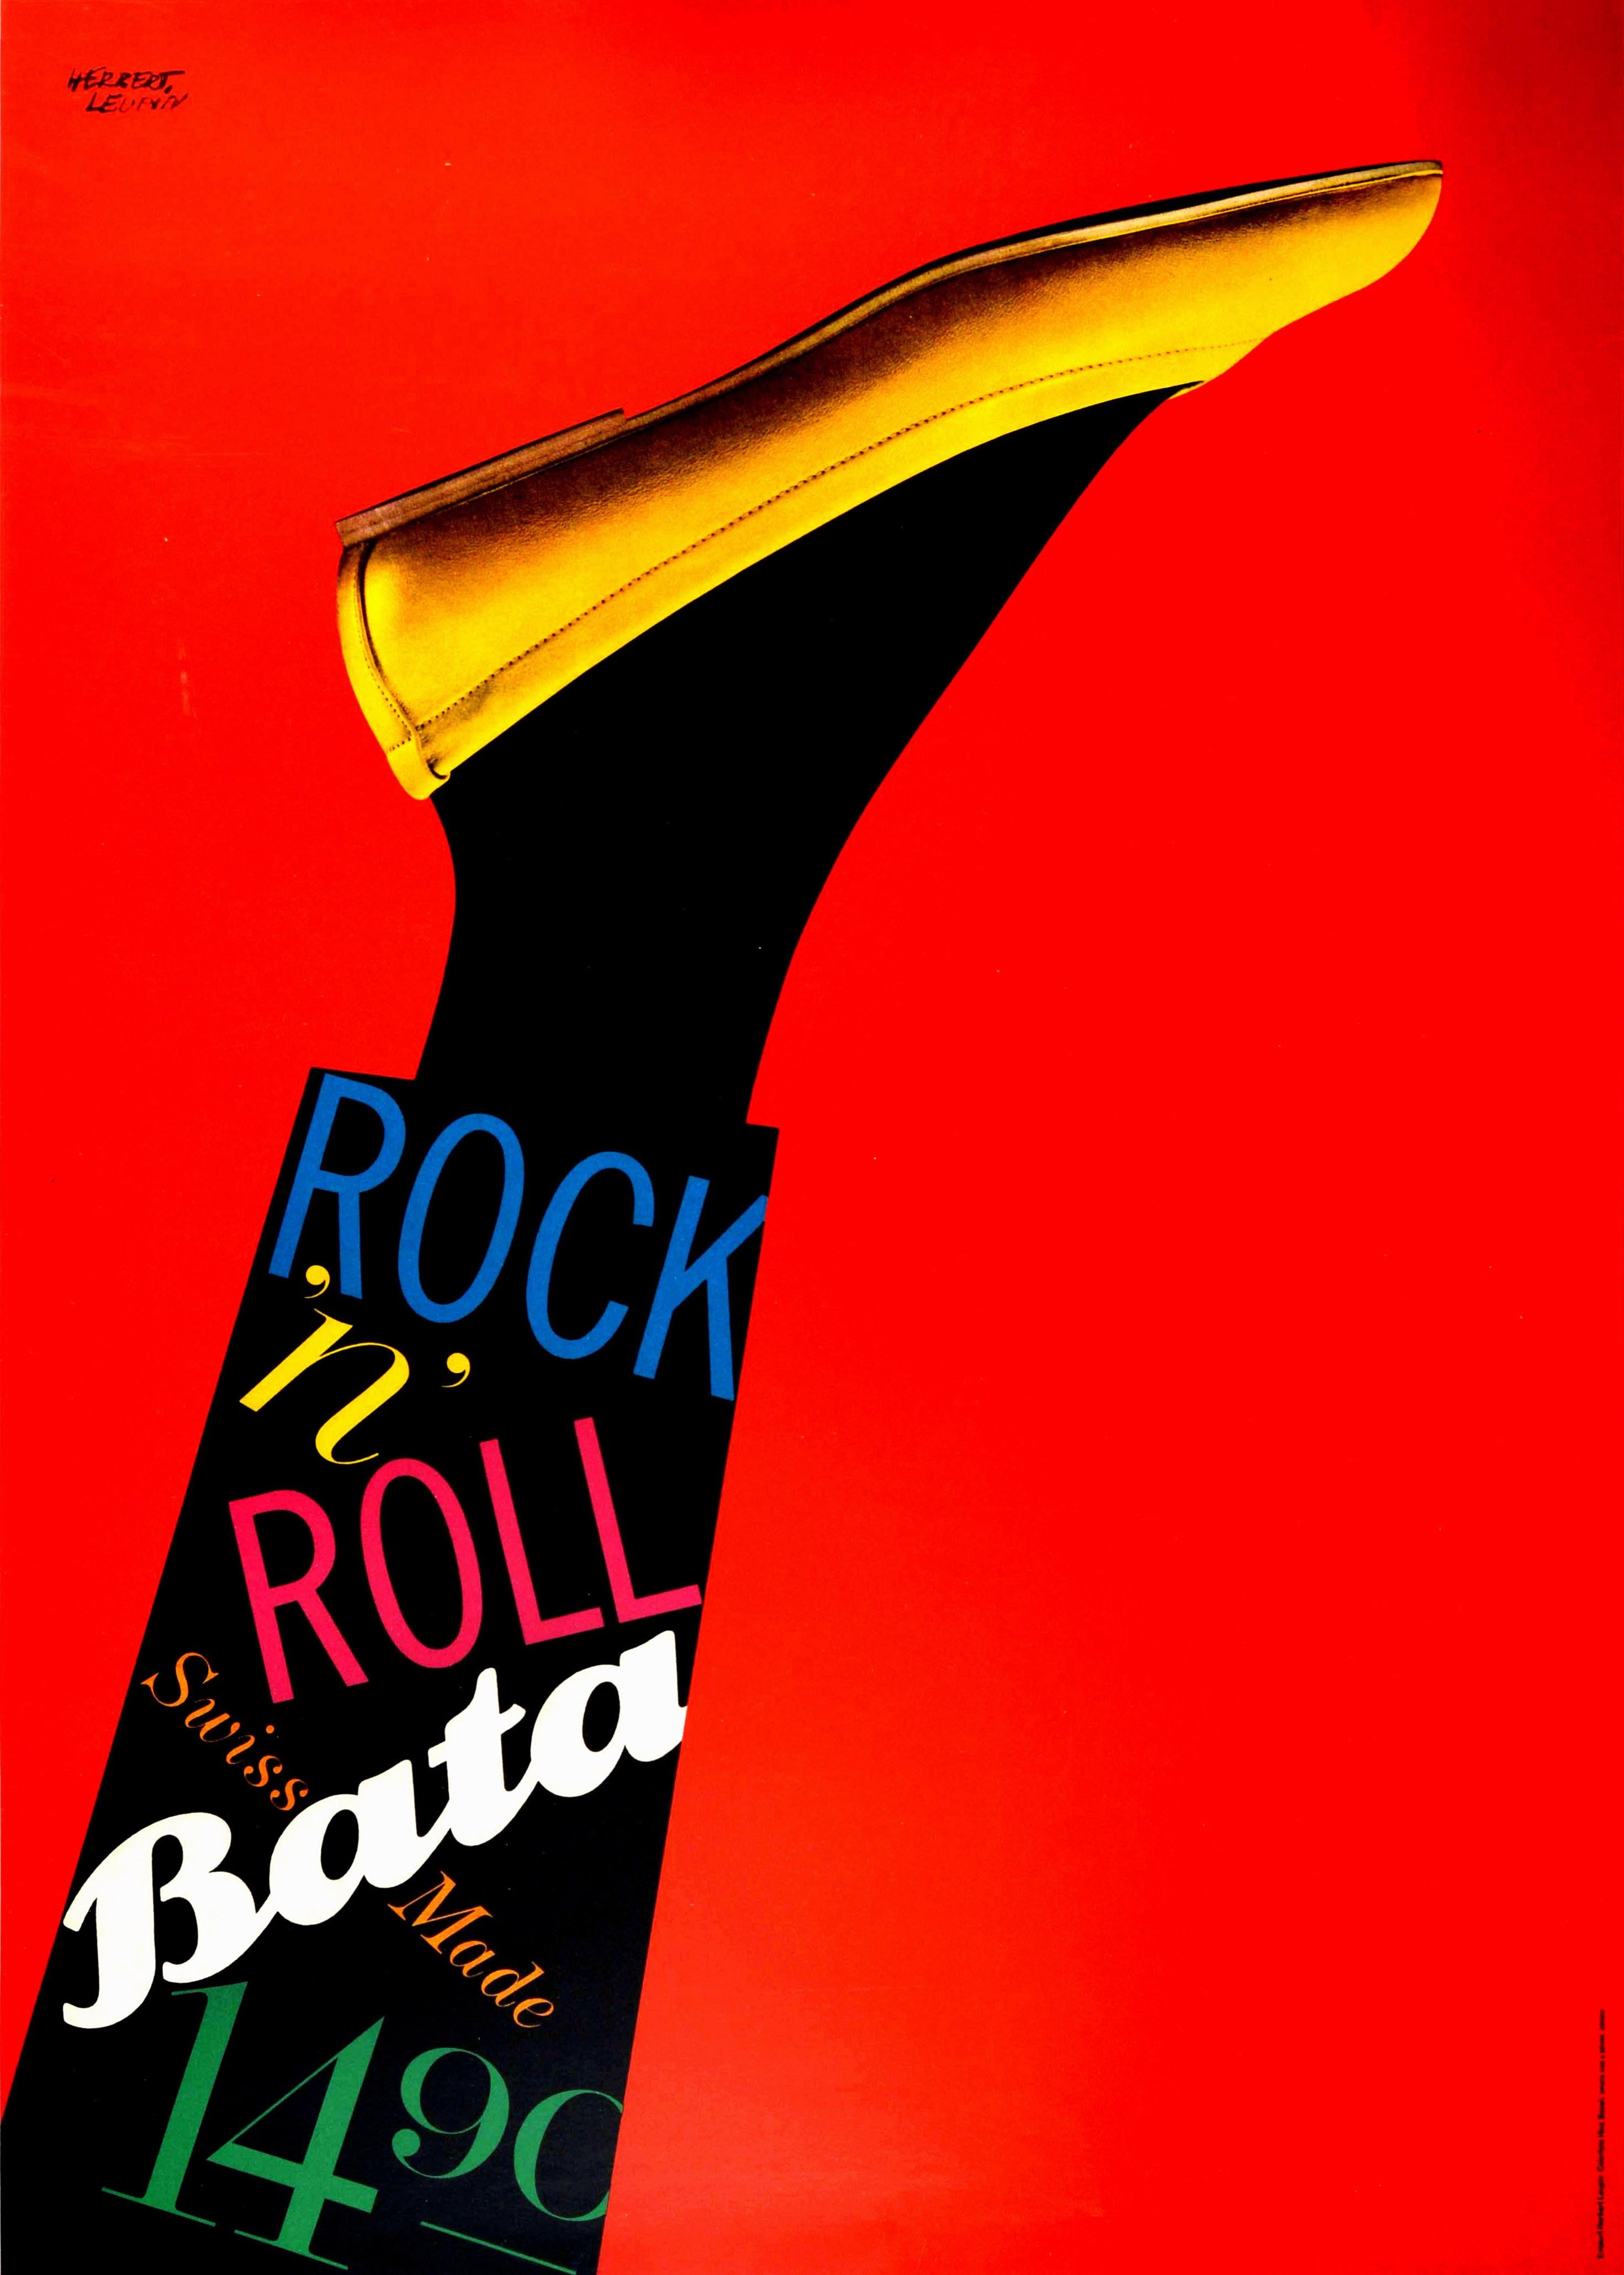 Herbert Leupin Print - Original Vintage Poster Bata Shoes Swiss Made Rock N Roll Fashion Art Design